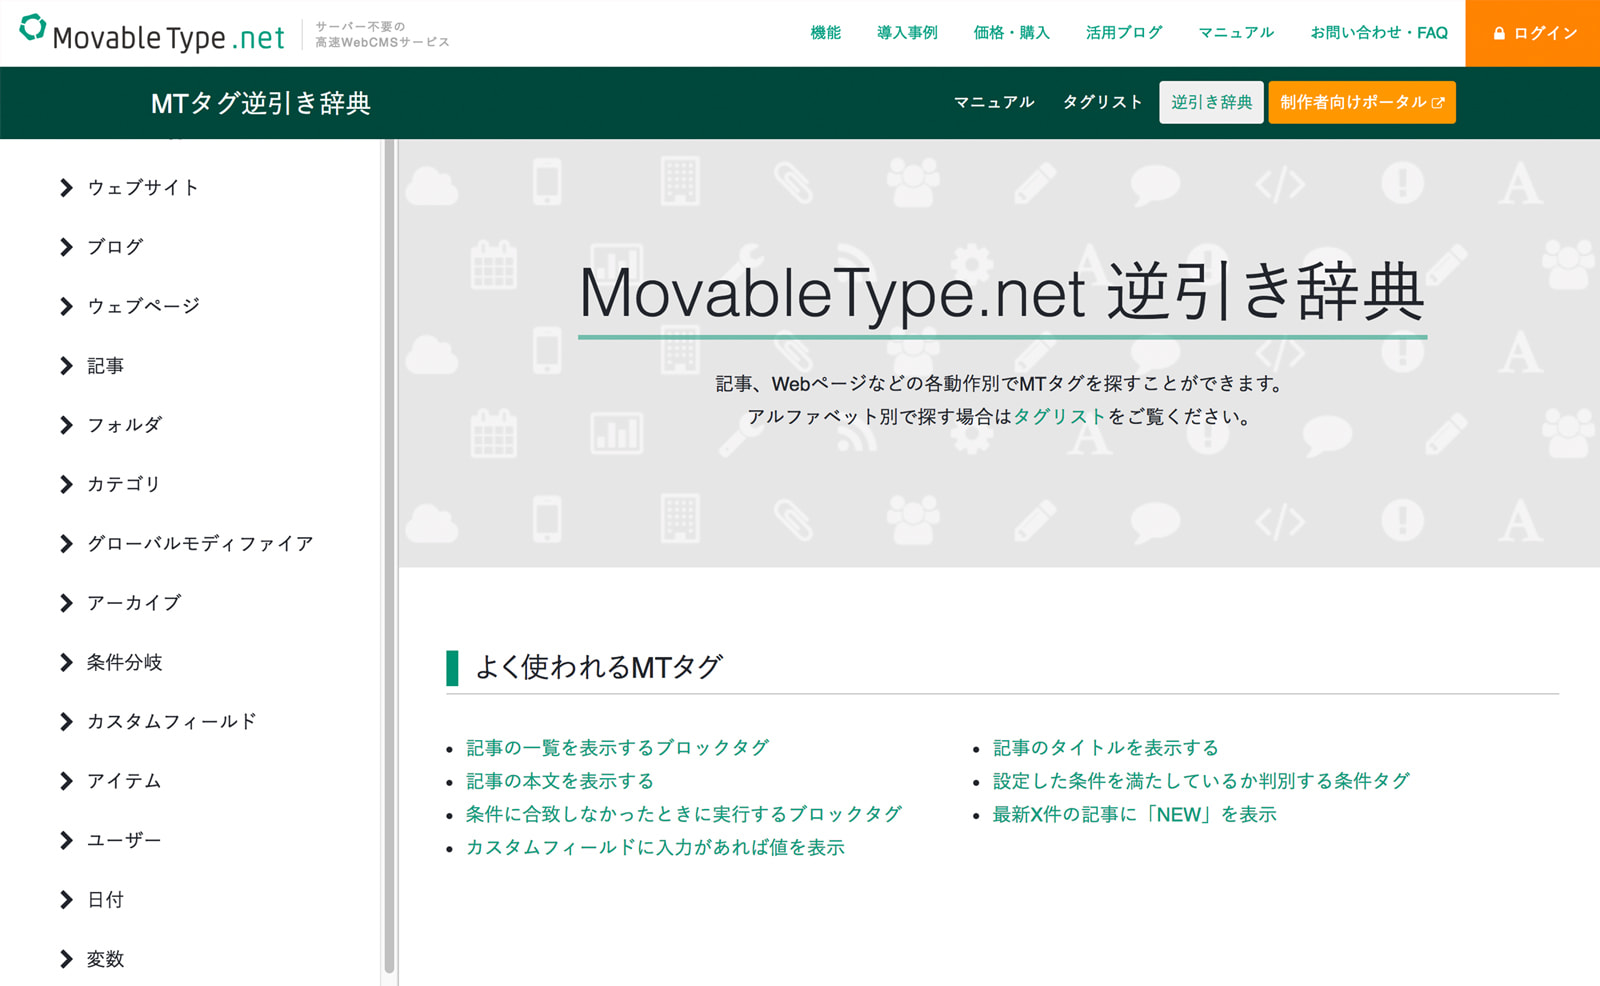 MovableType.net 逆引き辞典を大幅リニューアルしました！